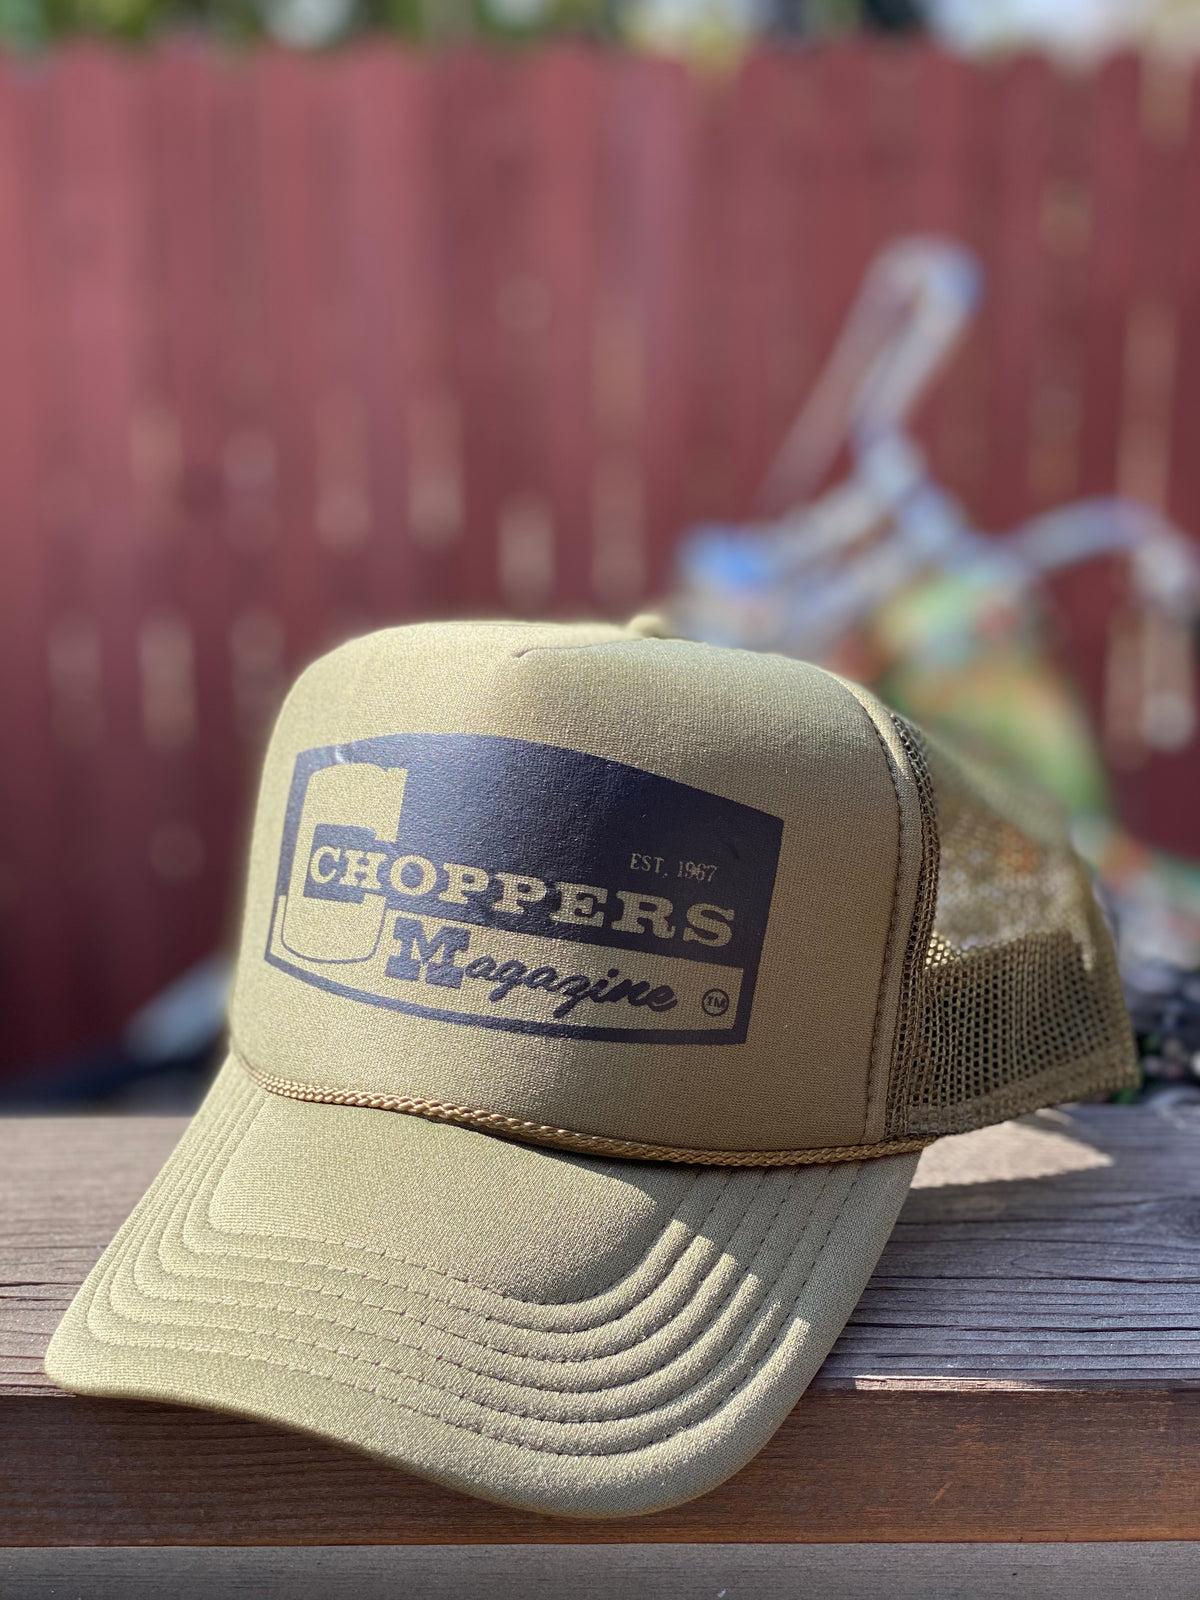 chopper 2 hats